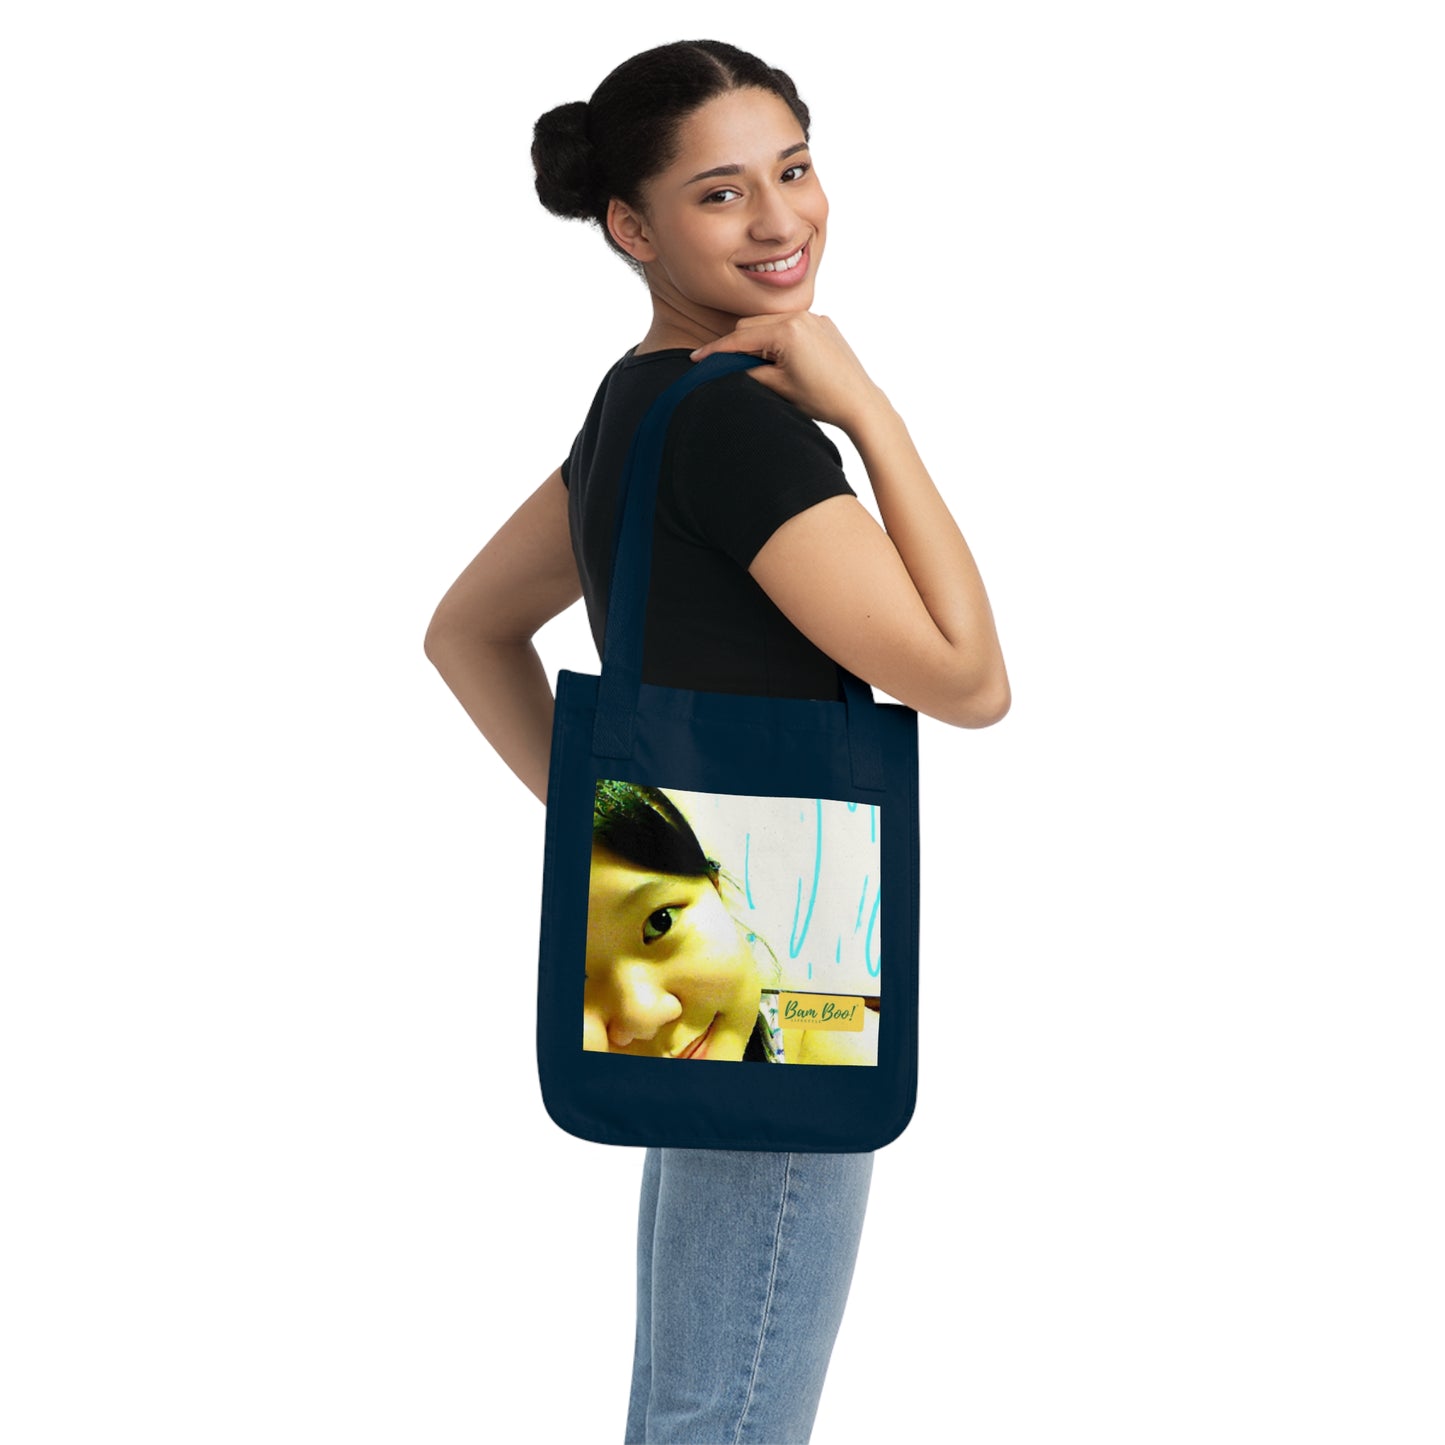 "Digital Art Self-Portrait: Creating an Enchanting, Creative Piece of Work" - Bam Boo! Lifestyle Eco-friendly Tote Bag